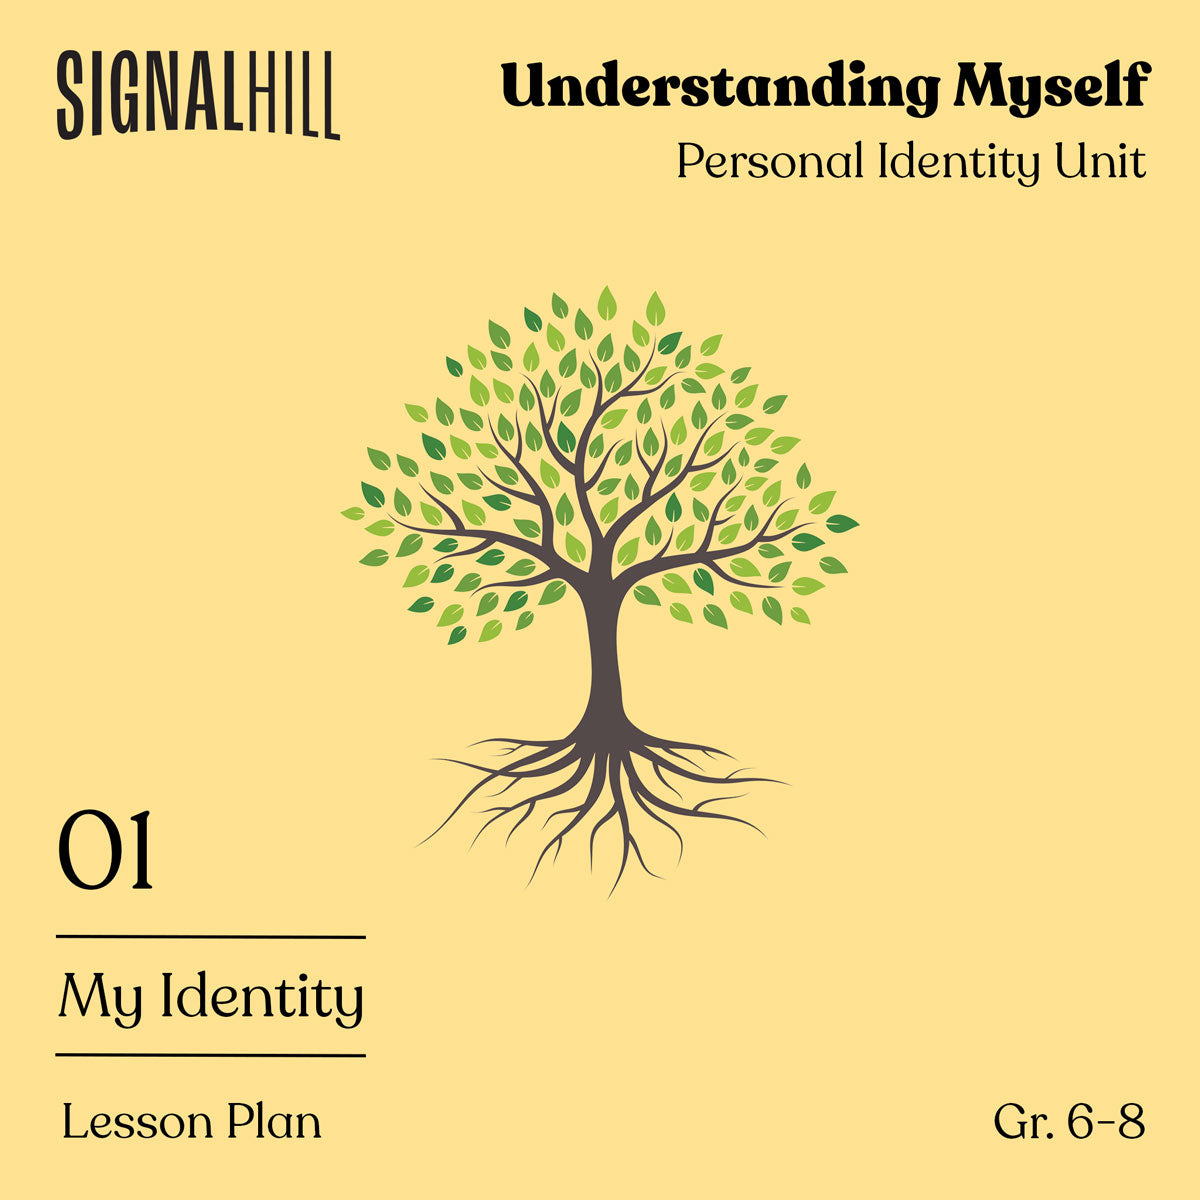 Lesson Plan 1: My Identity